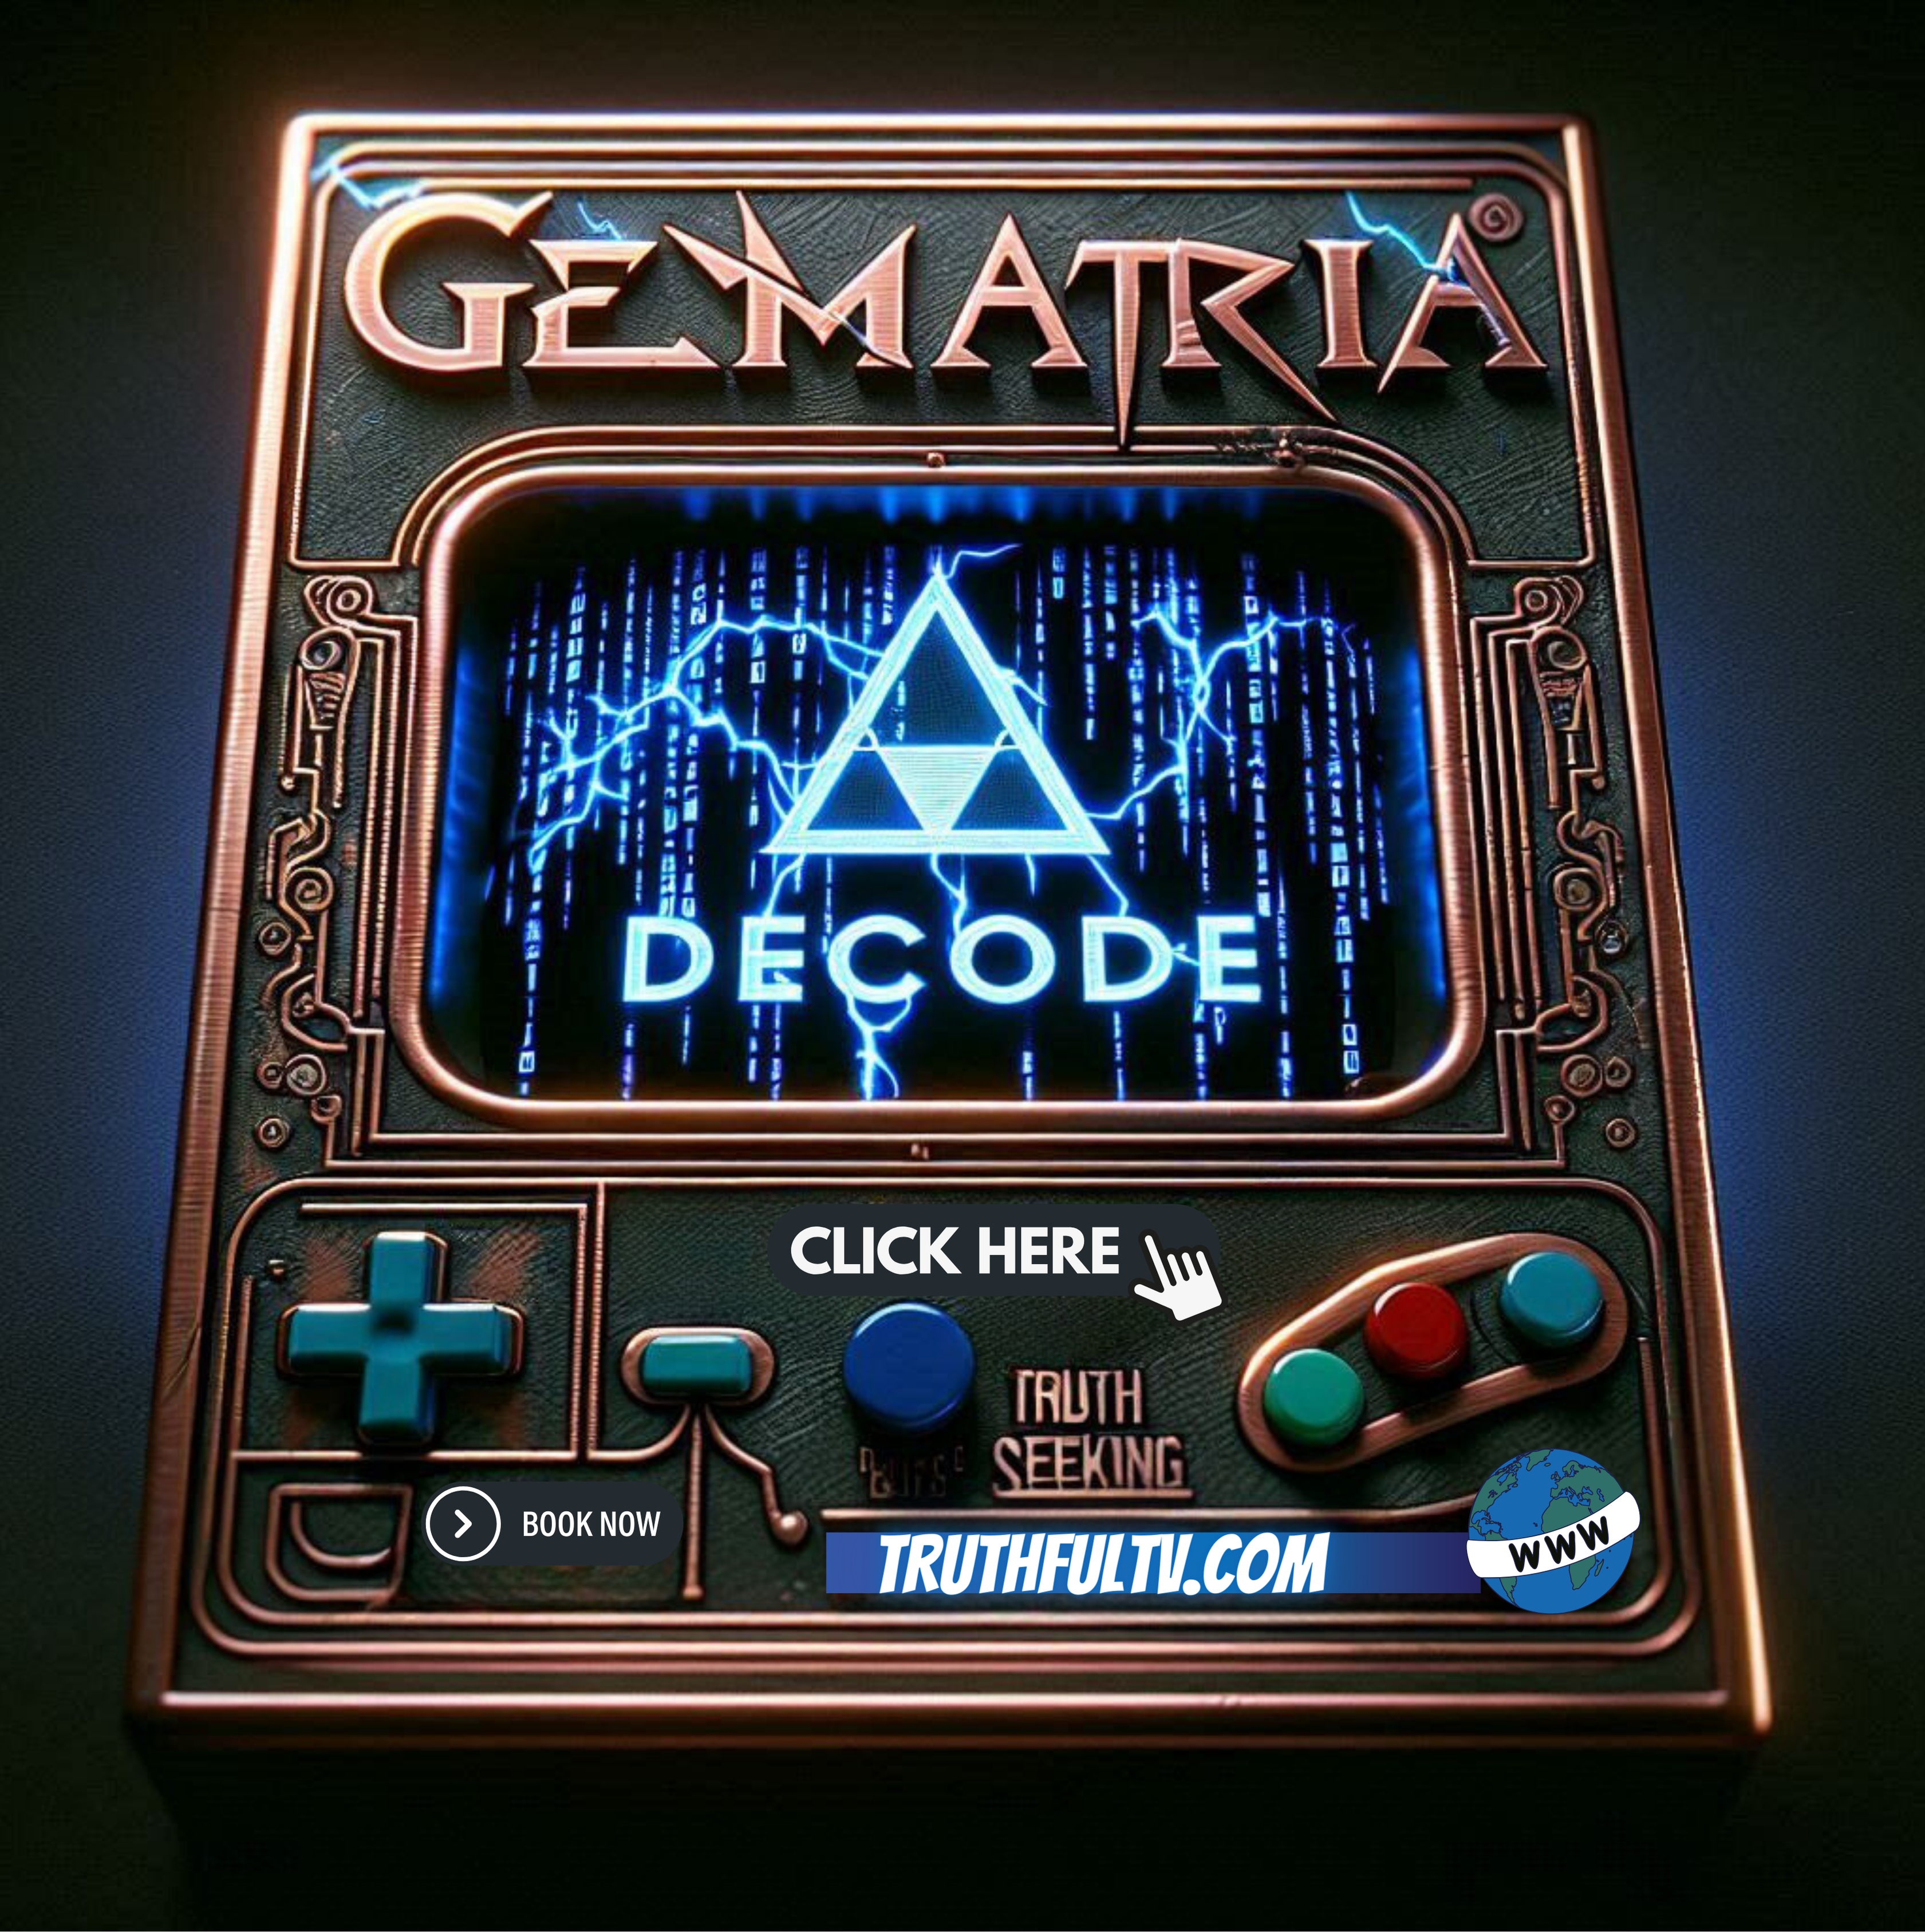 Gematria Decode Truthfultv.com Arcade Machine